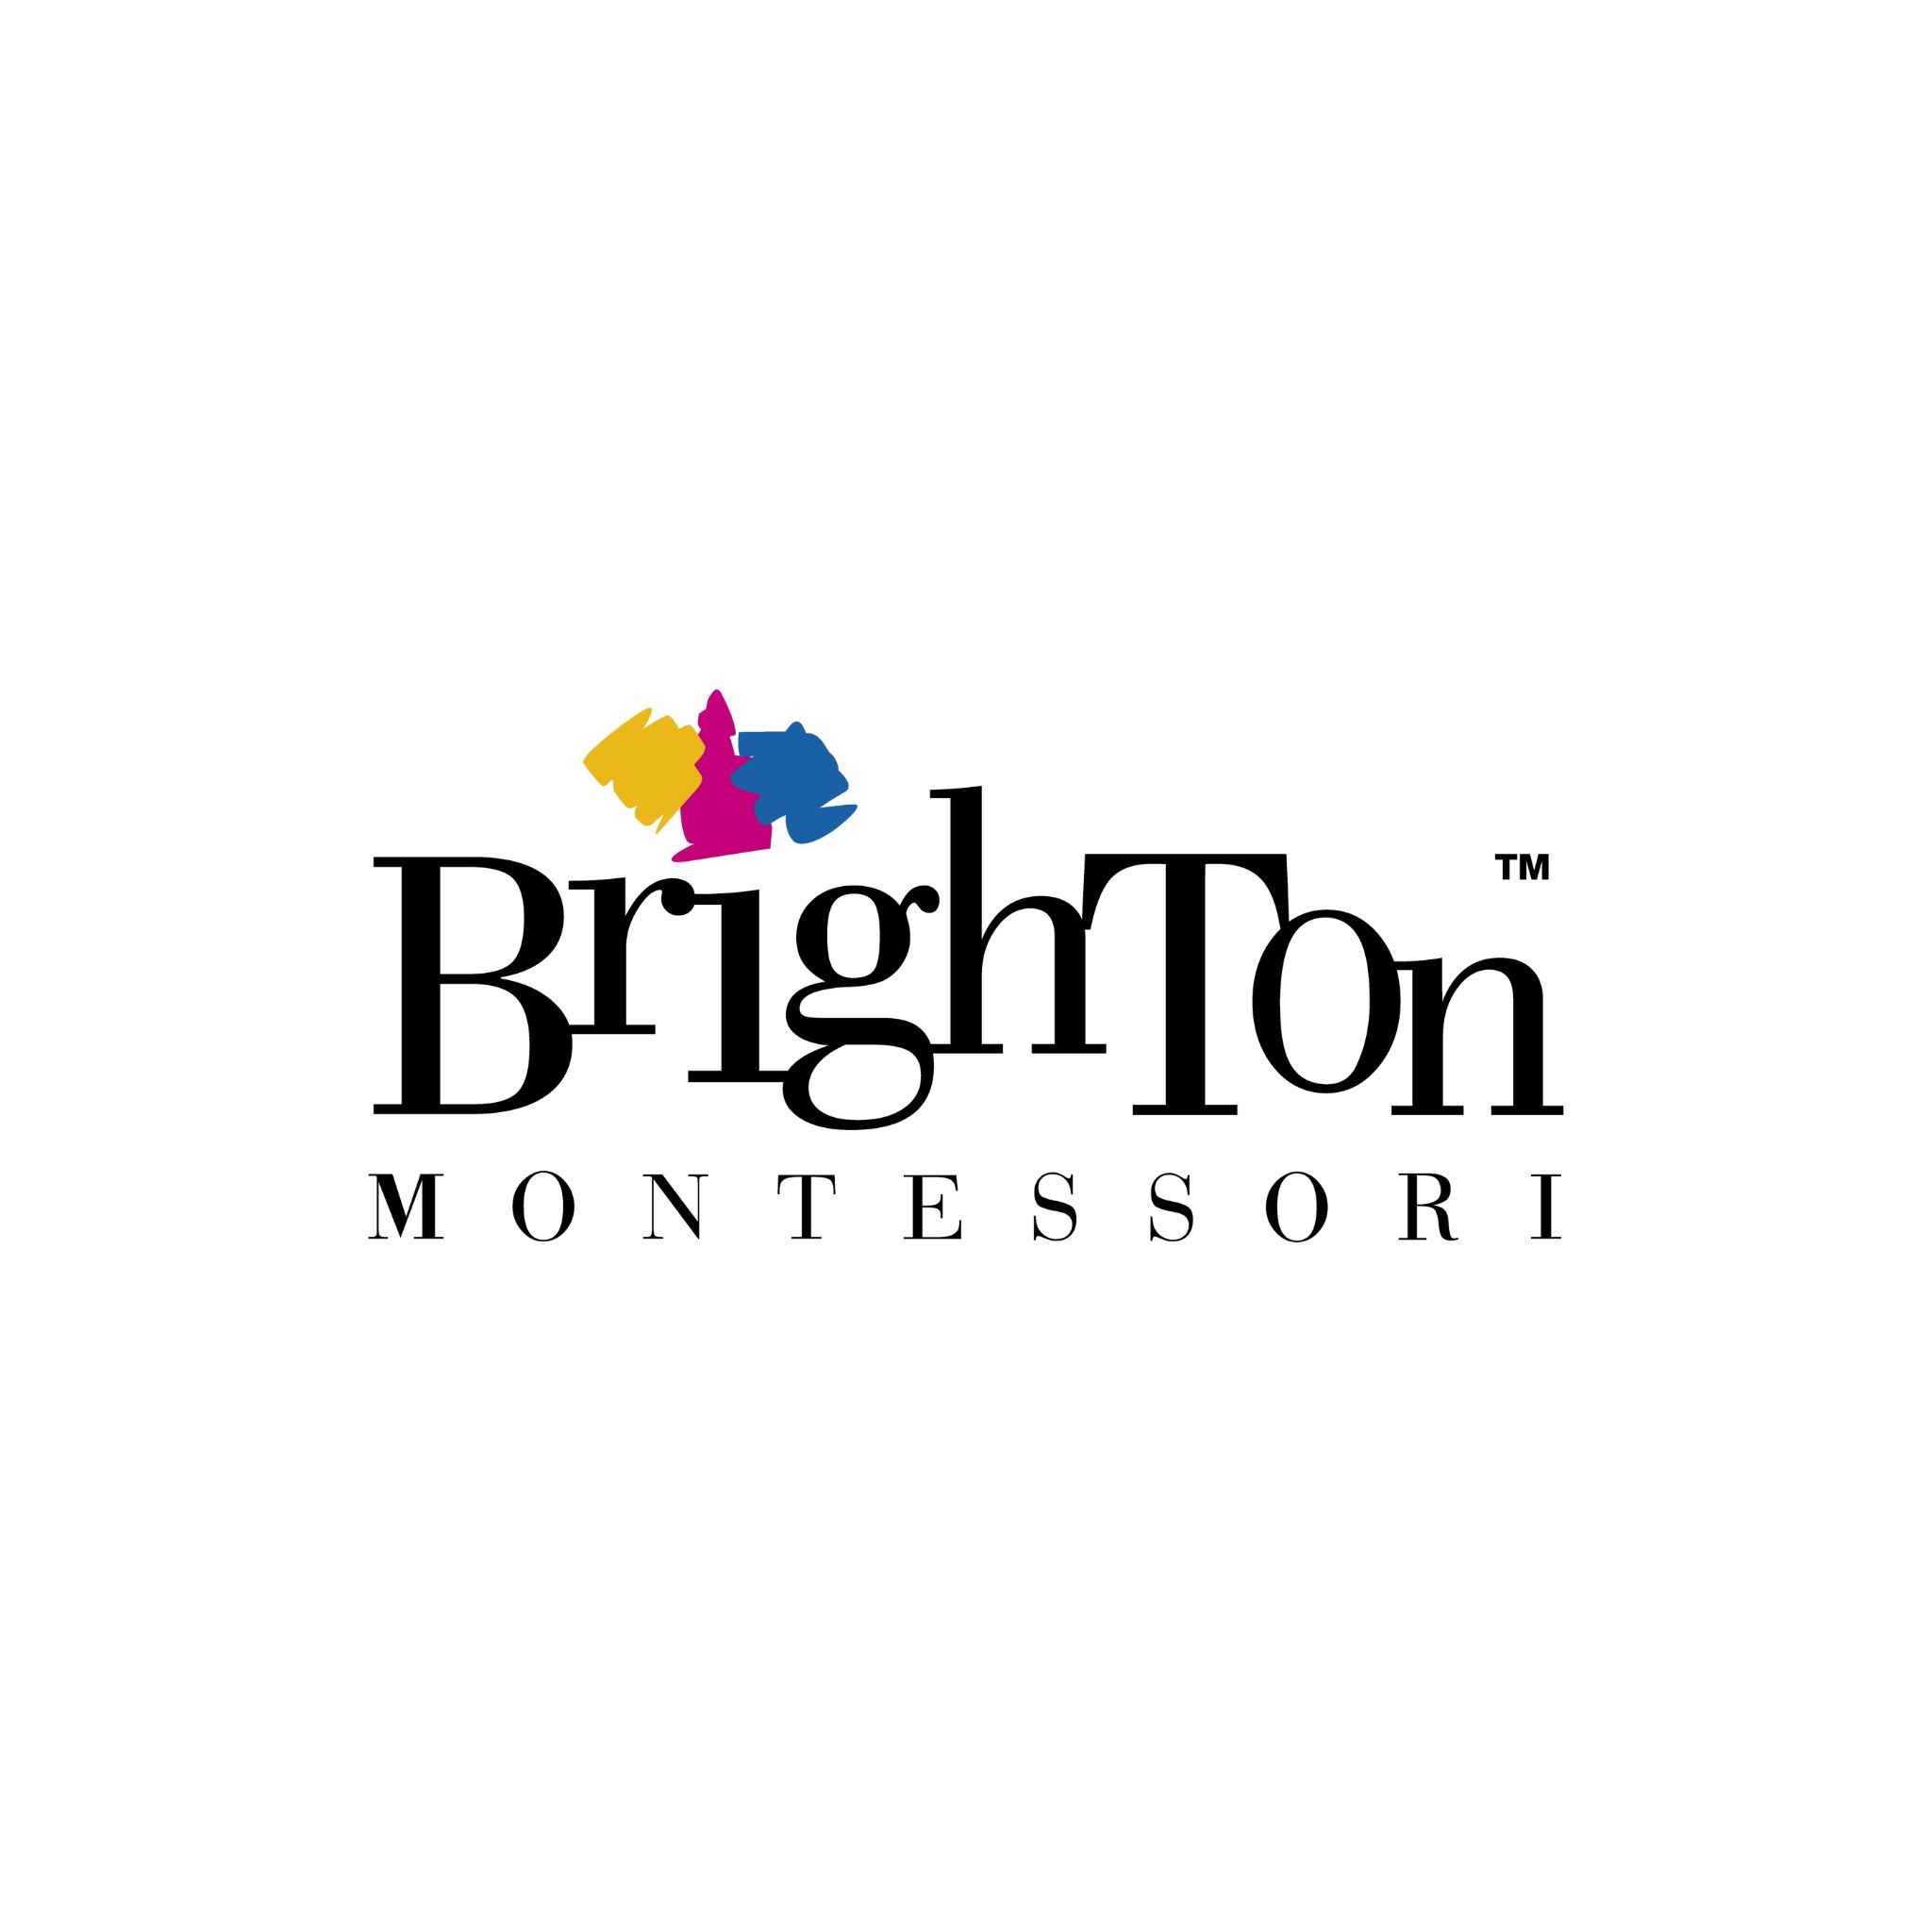 Brighton Montessori